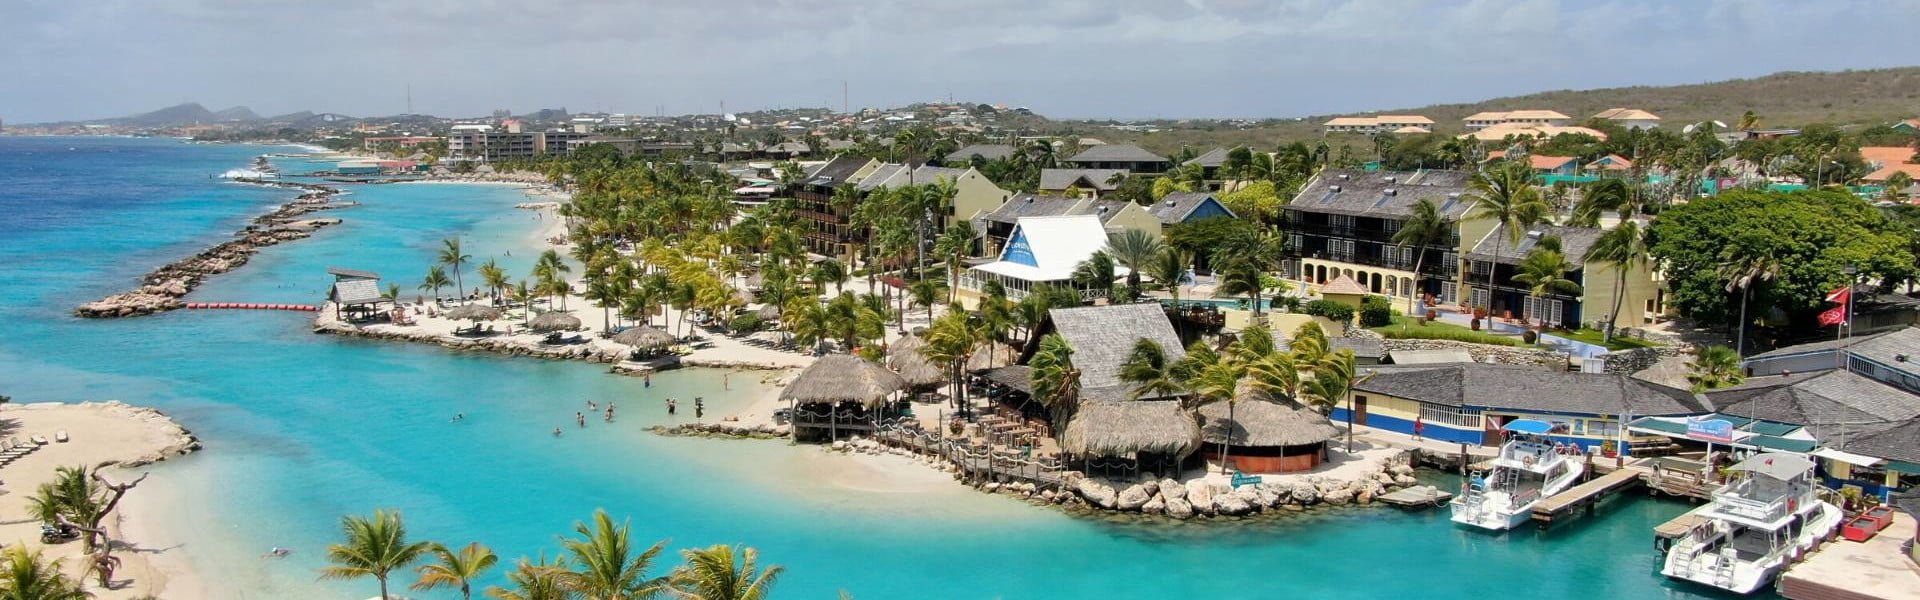 Vakantiehuizen nabij mambo beach Curacao